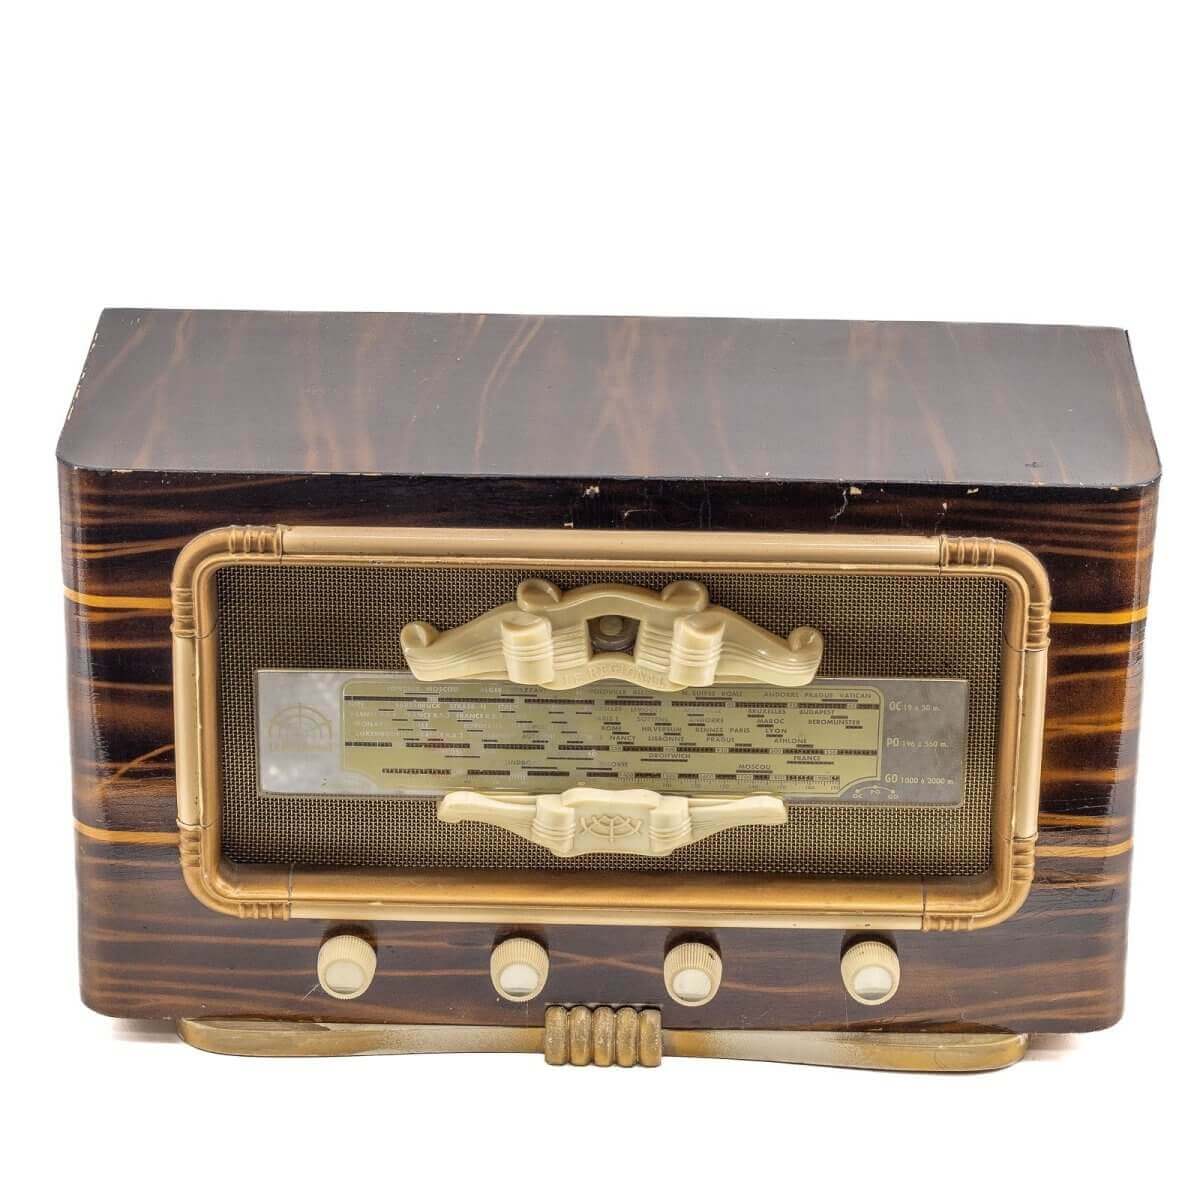 Radio Bluetooth Le Regional Vintage 50’S enceinte connectée bluetooth haut de gamme prodige radio vintage design